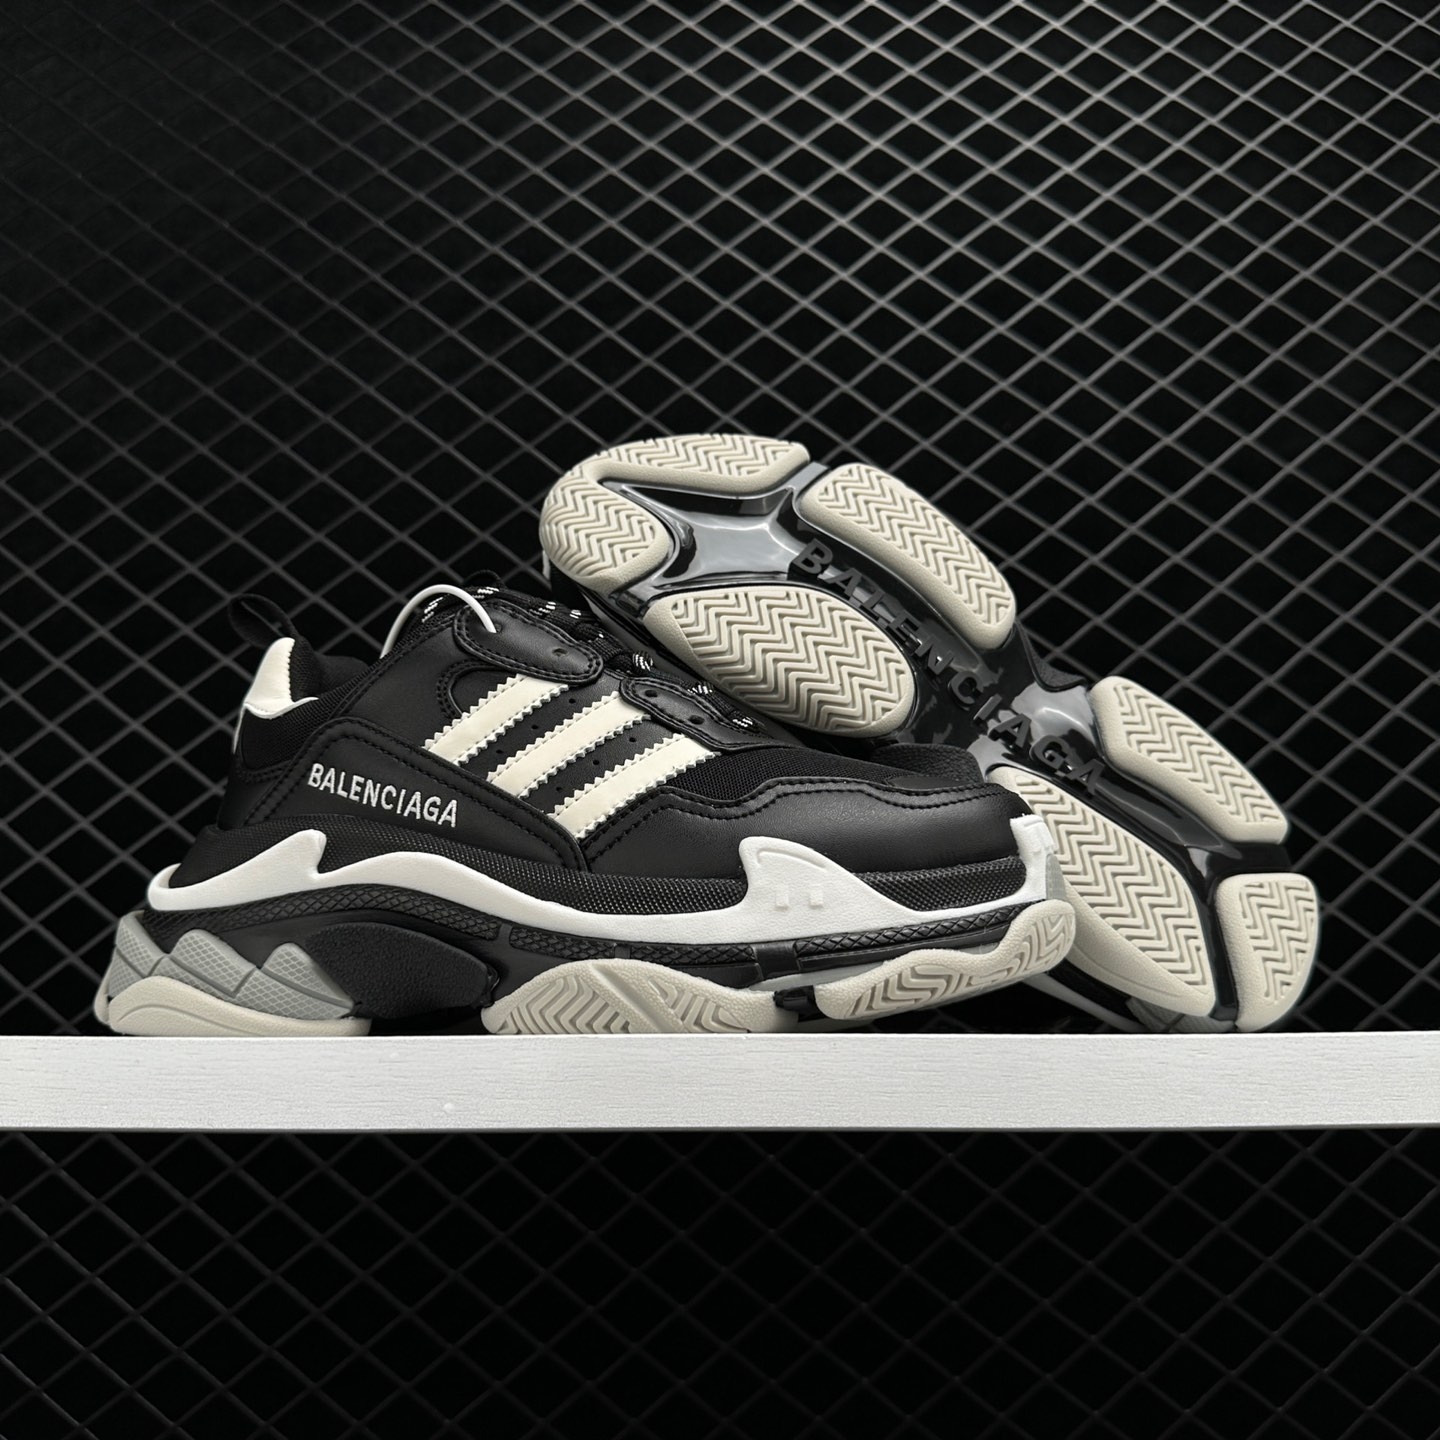 Balenciaga x Adidas Triple S Sneaker - Stylish and Versatile Footwear